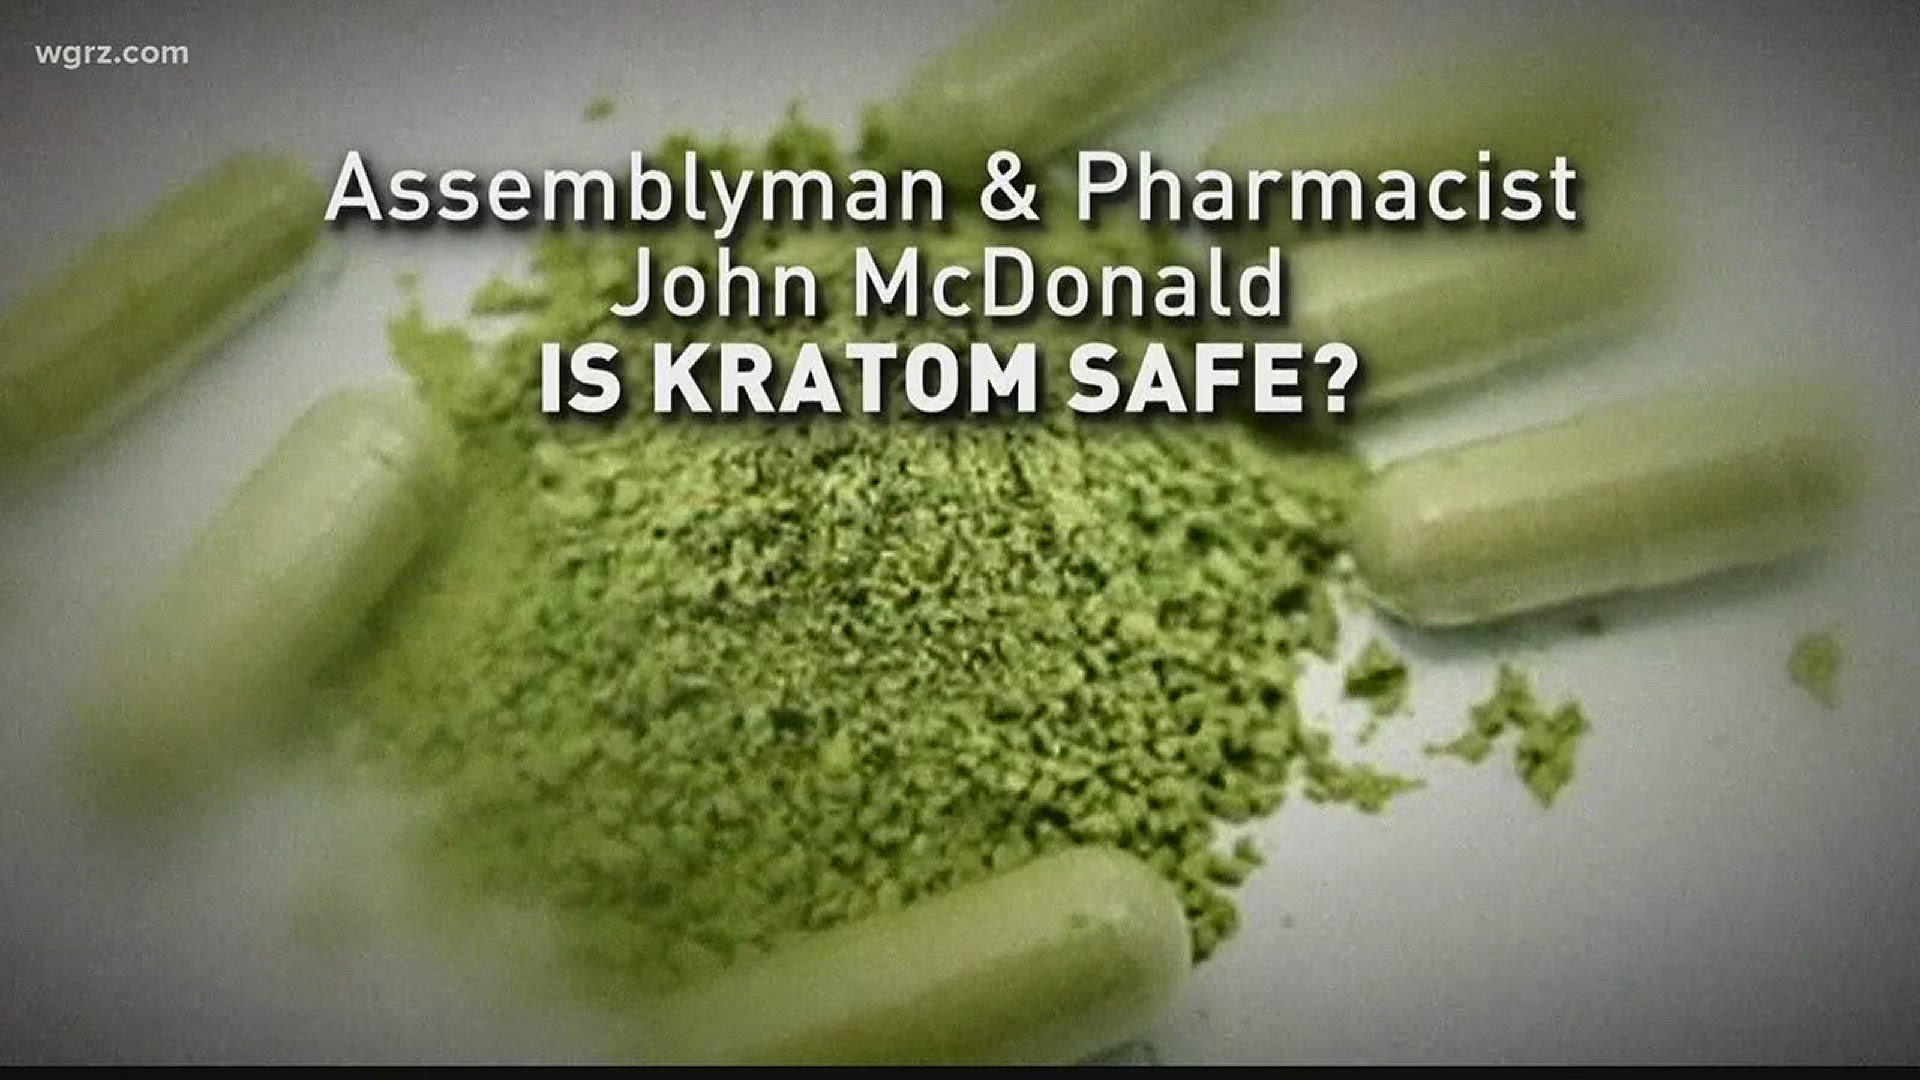 Verify: Is kratum a safe alternative pain killer?